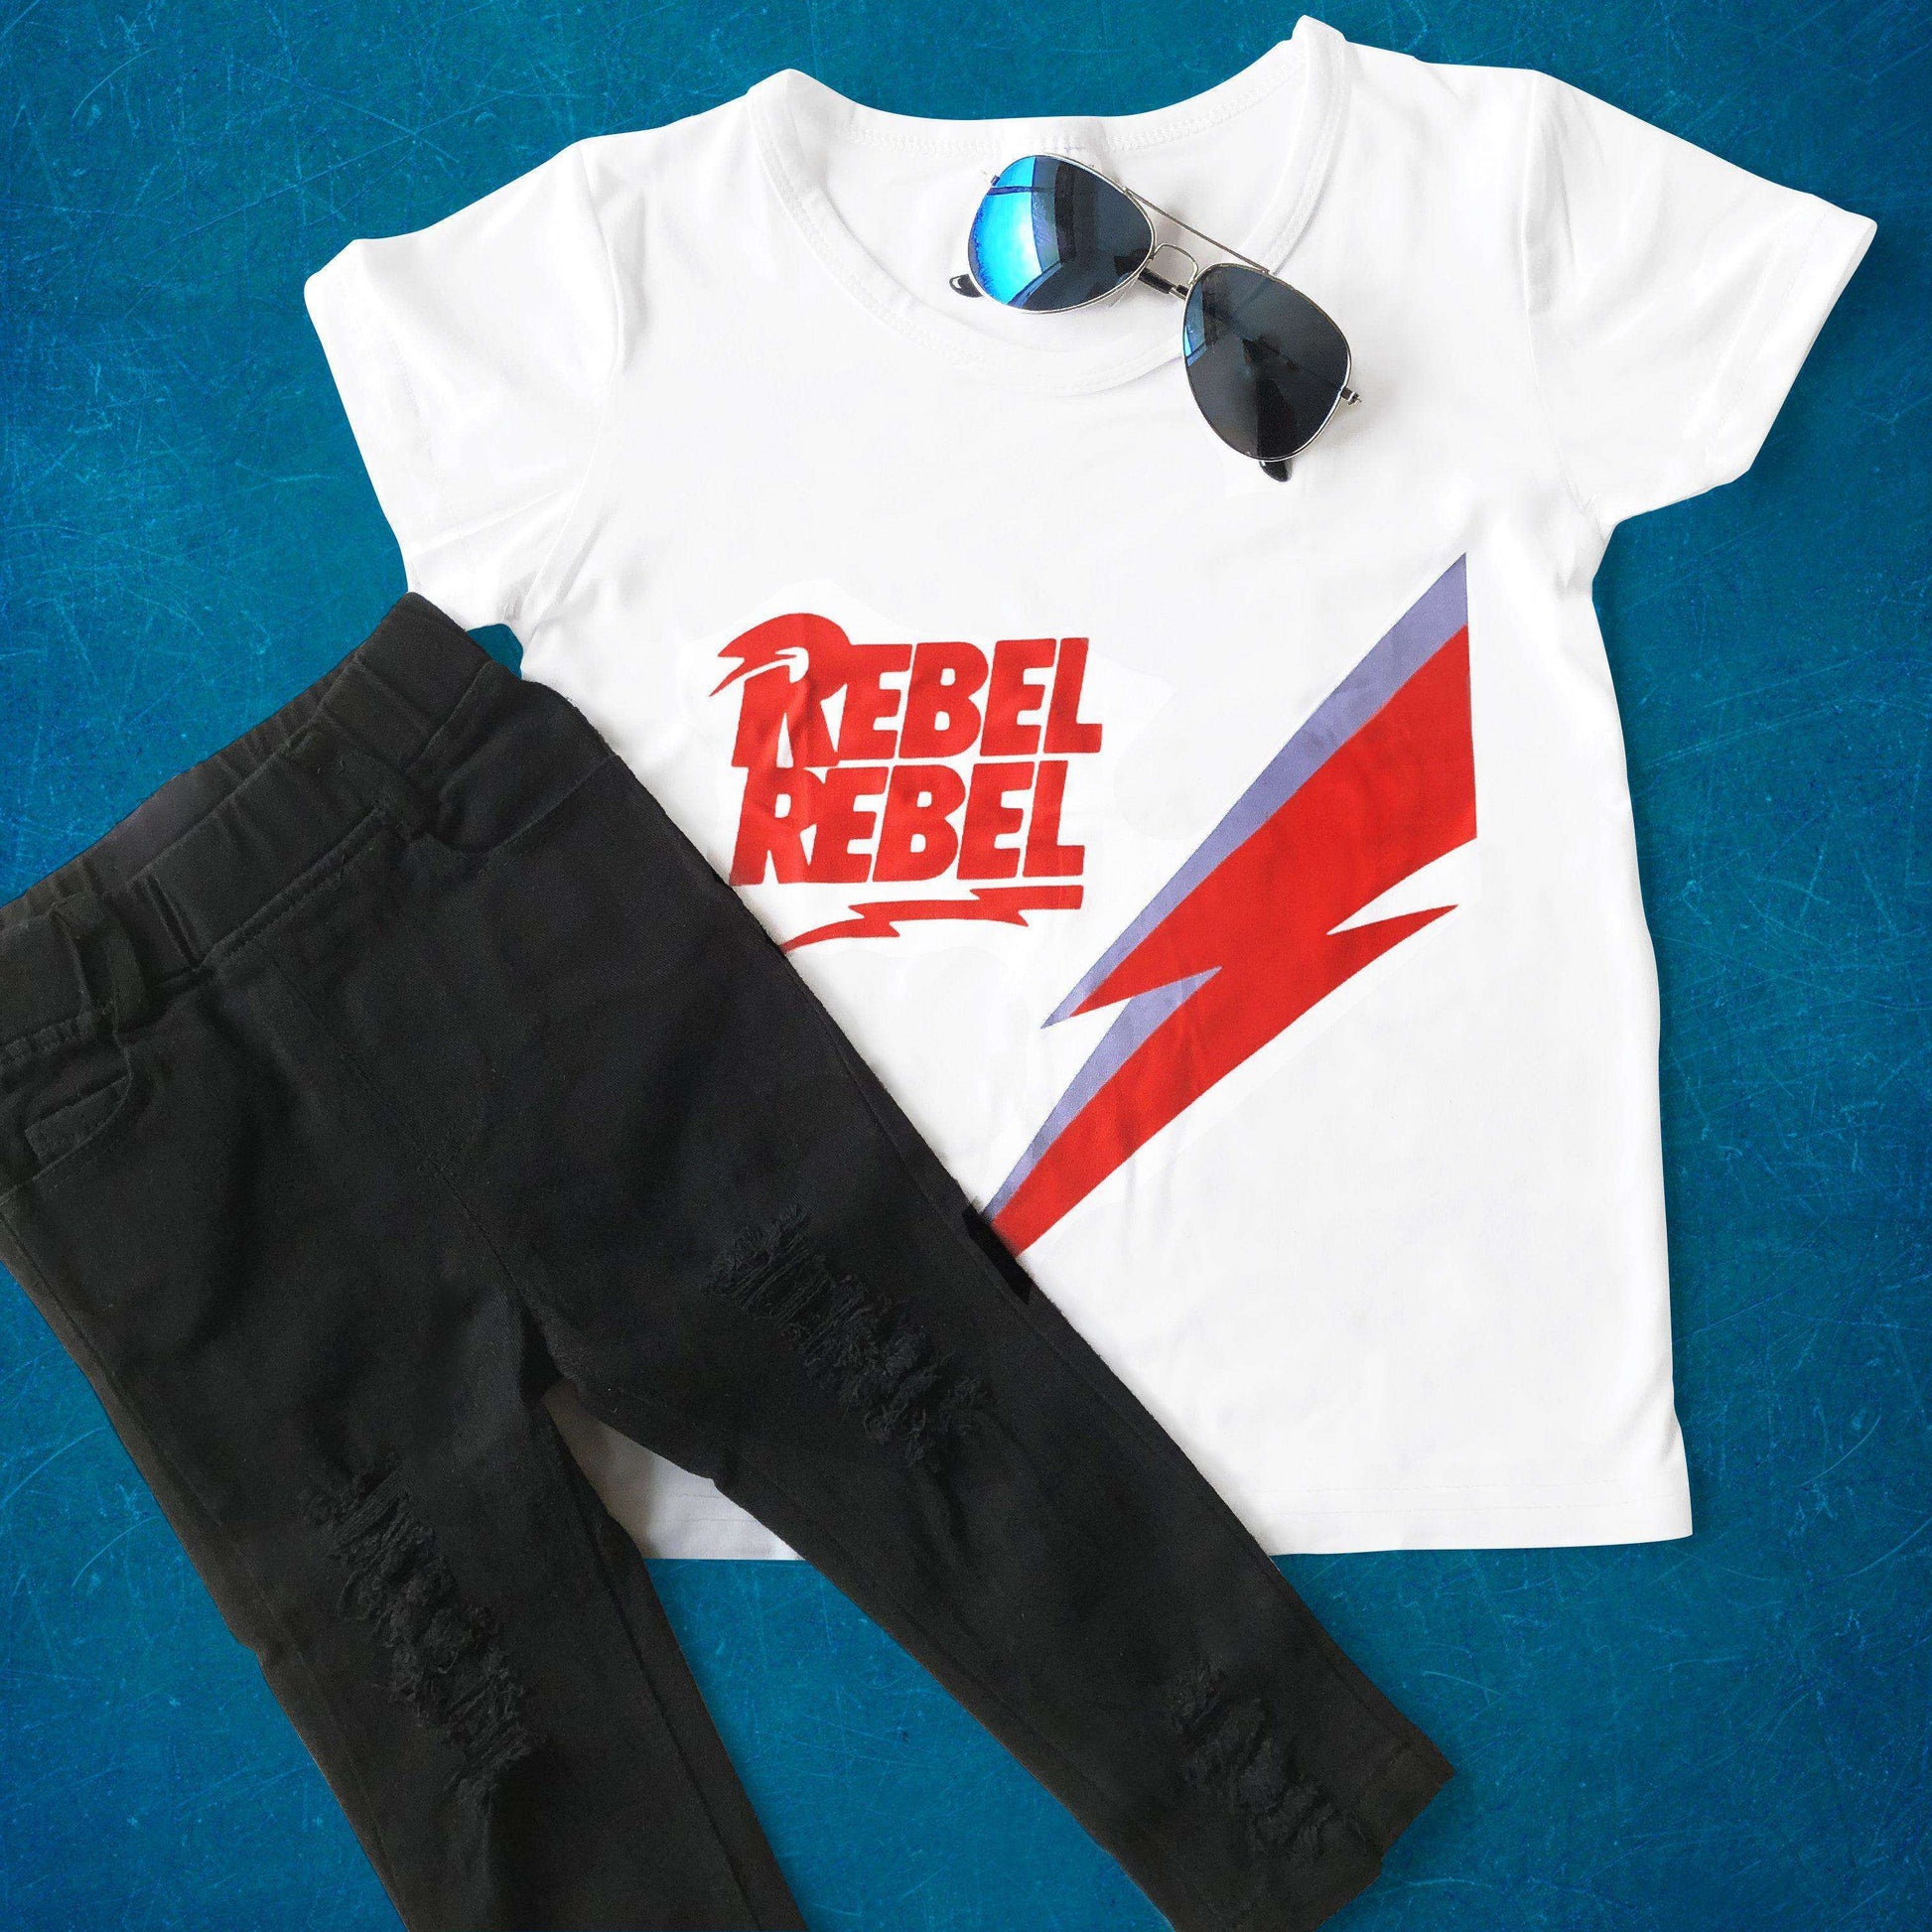 Kids jeans black ripped denim with Rebel Rebel kids t-shirt